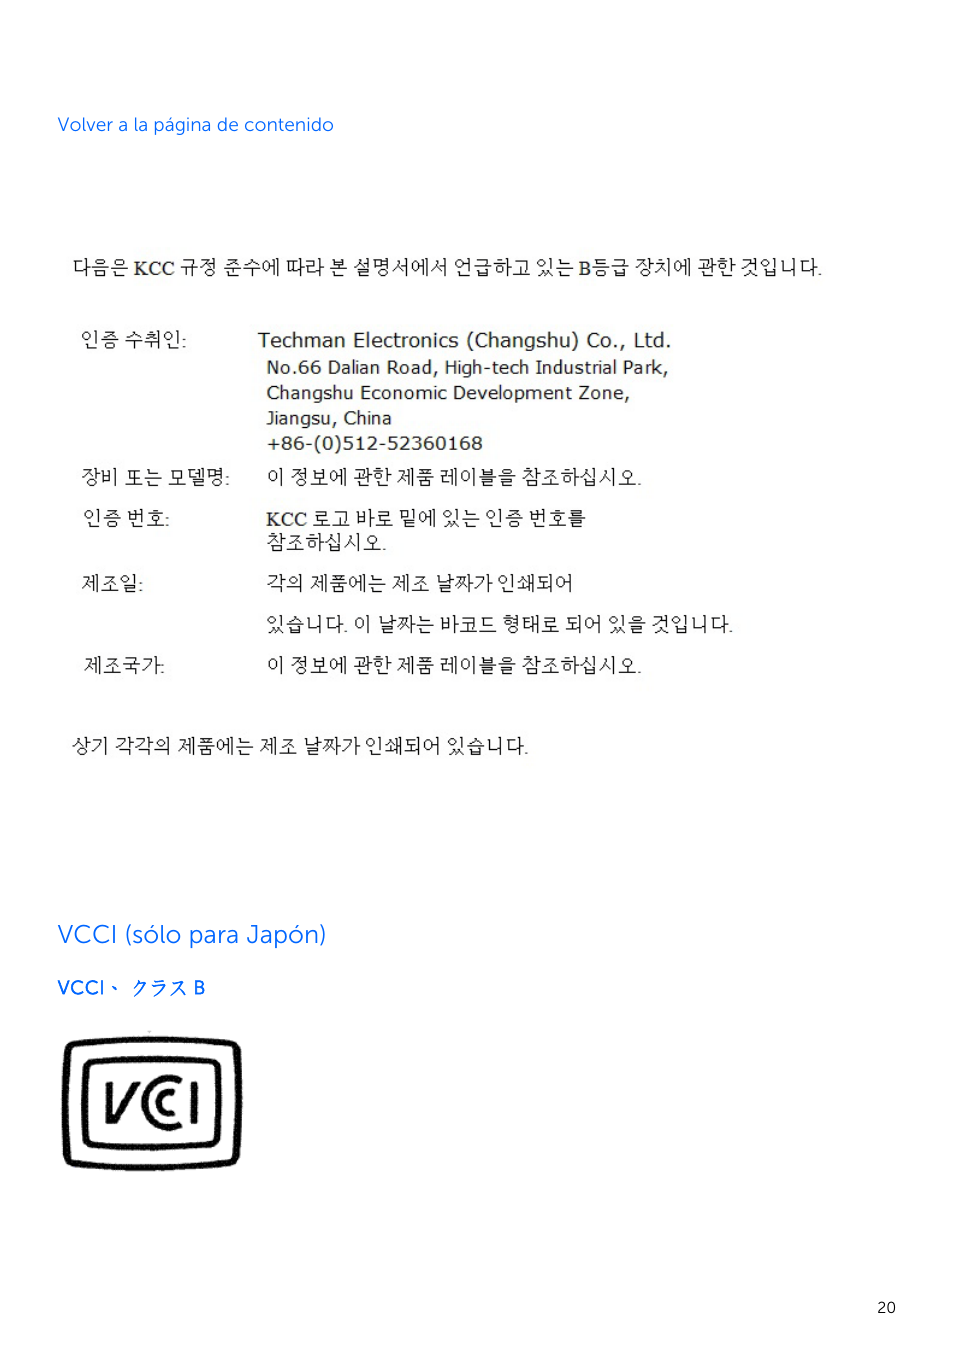 Vcci (sólo para japón) | Dell External USB Ultra Slim DVD +/-RW Slot Drive DW514 Manual del usuario | Página 20 / 23